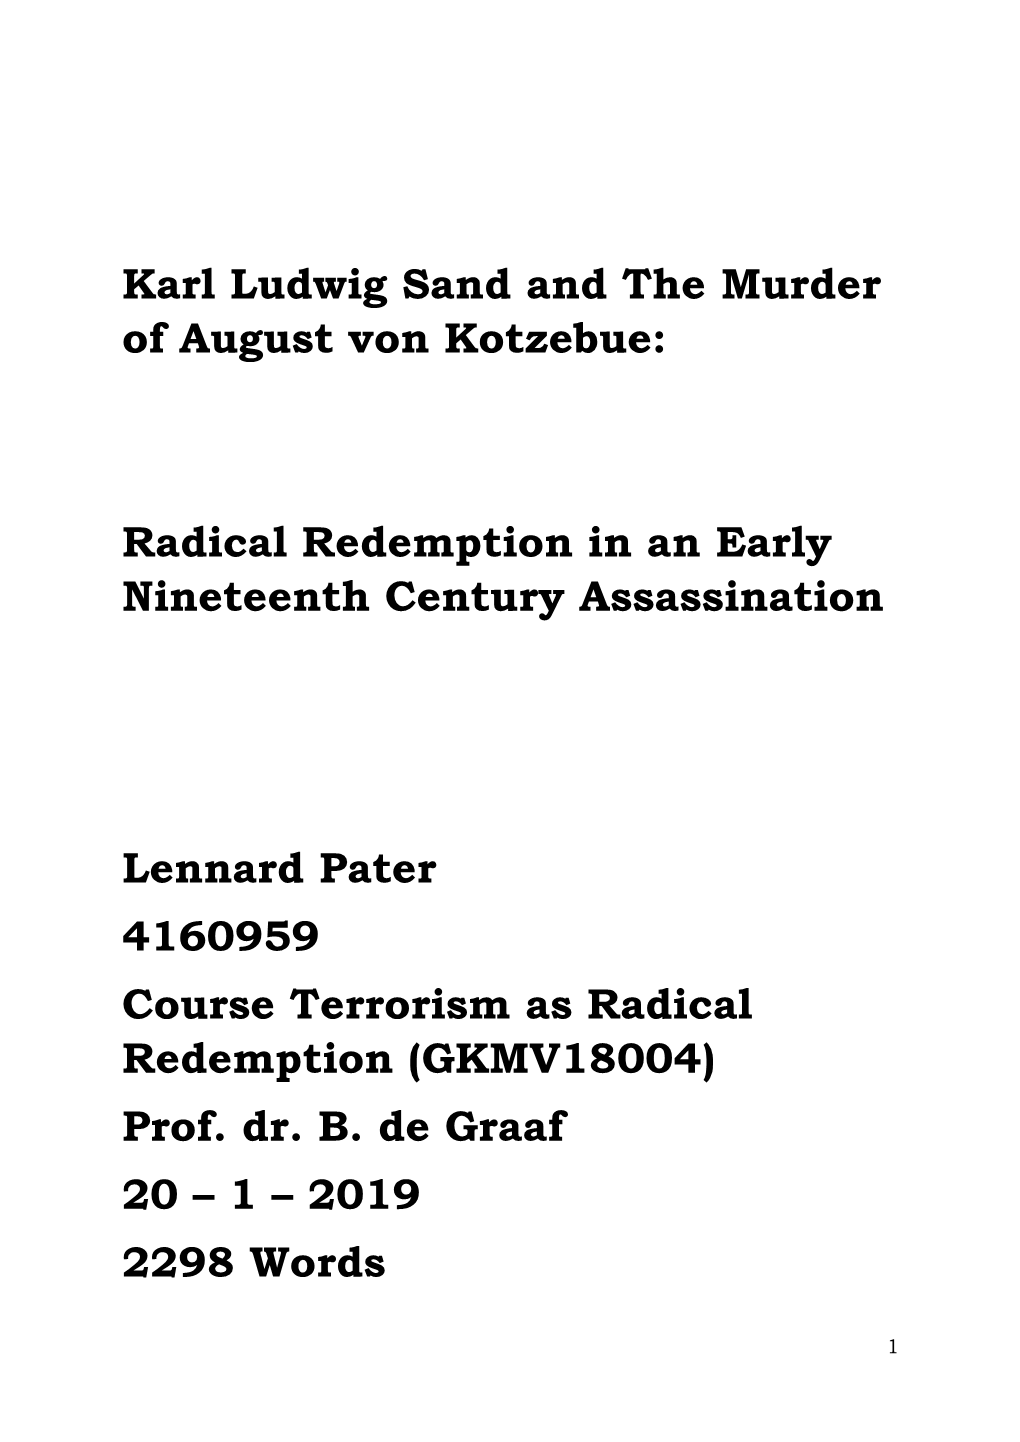 Karl Ludwig Sand and the Murder of August Von Kotzebue: Radical